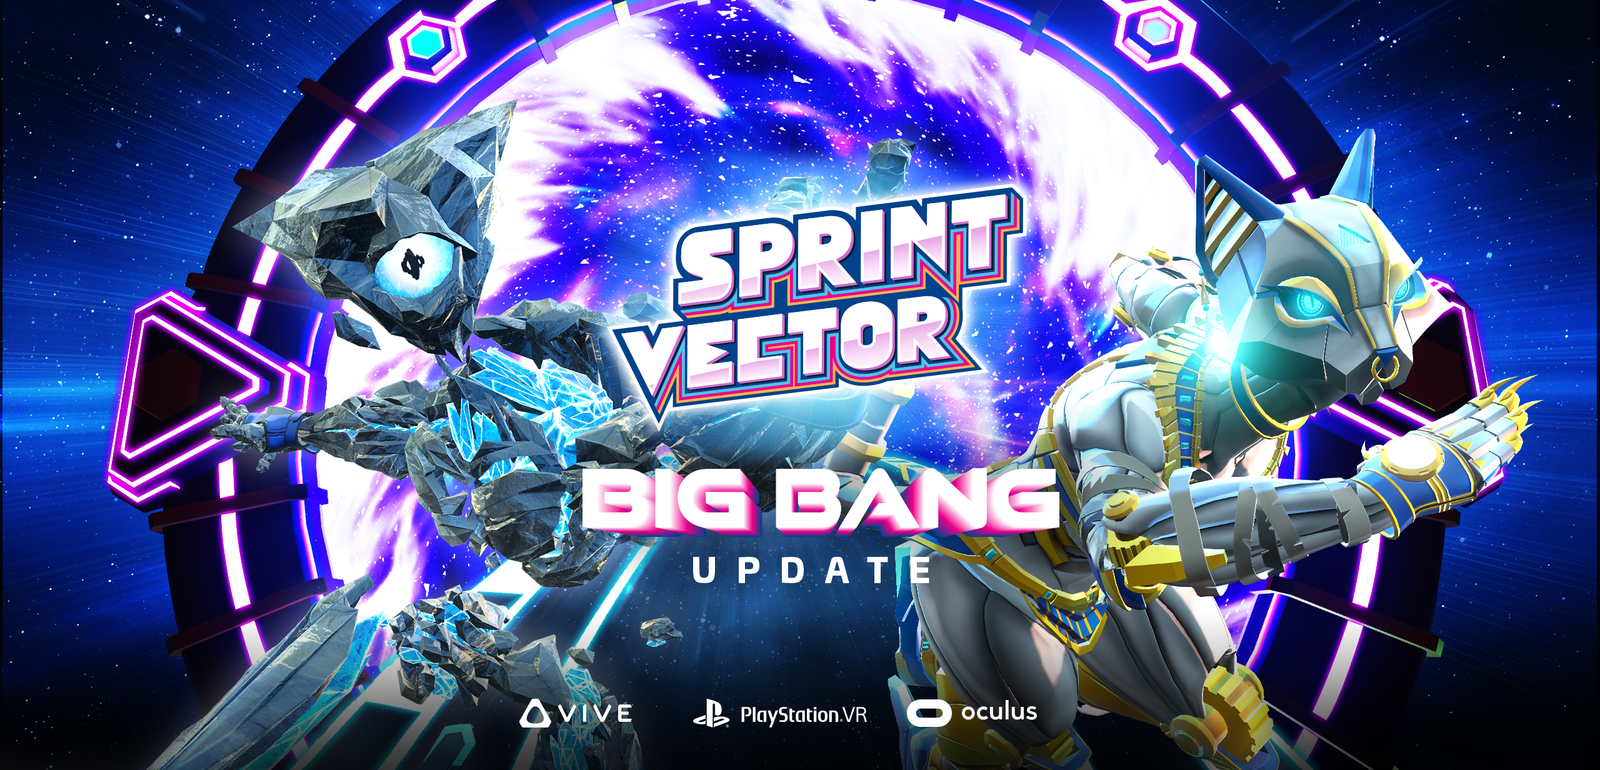 Big Bang Update Launch V2